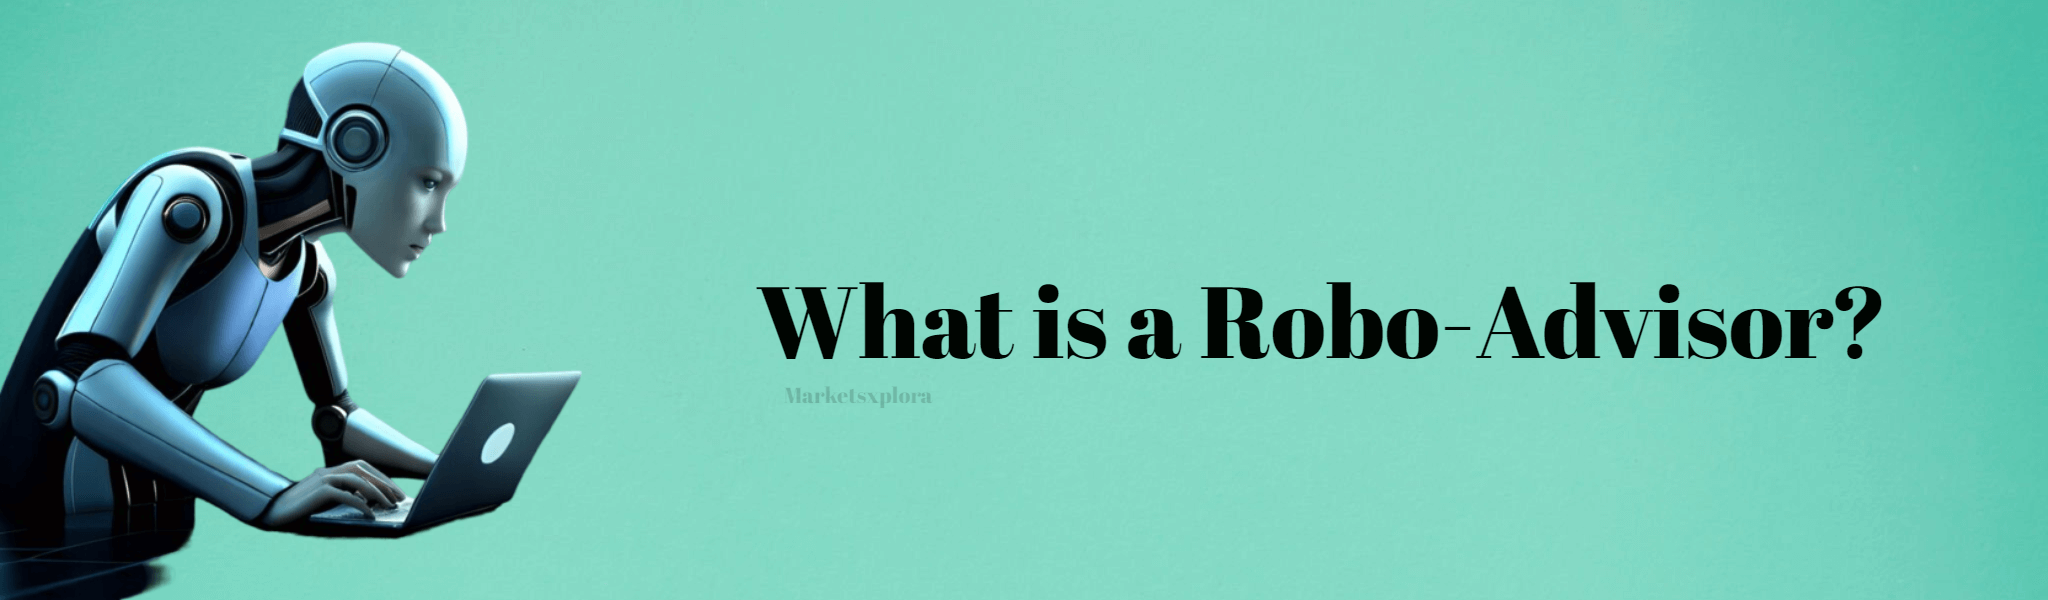 What is a Robo-Advisor?